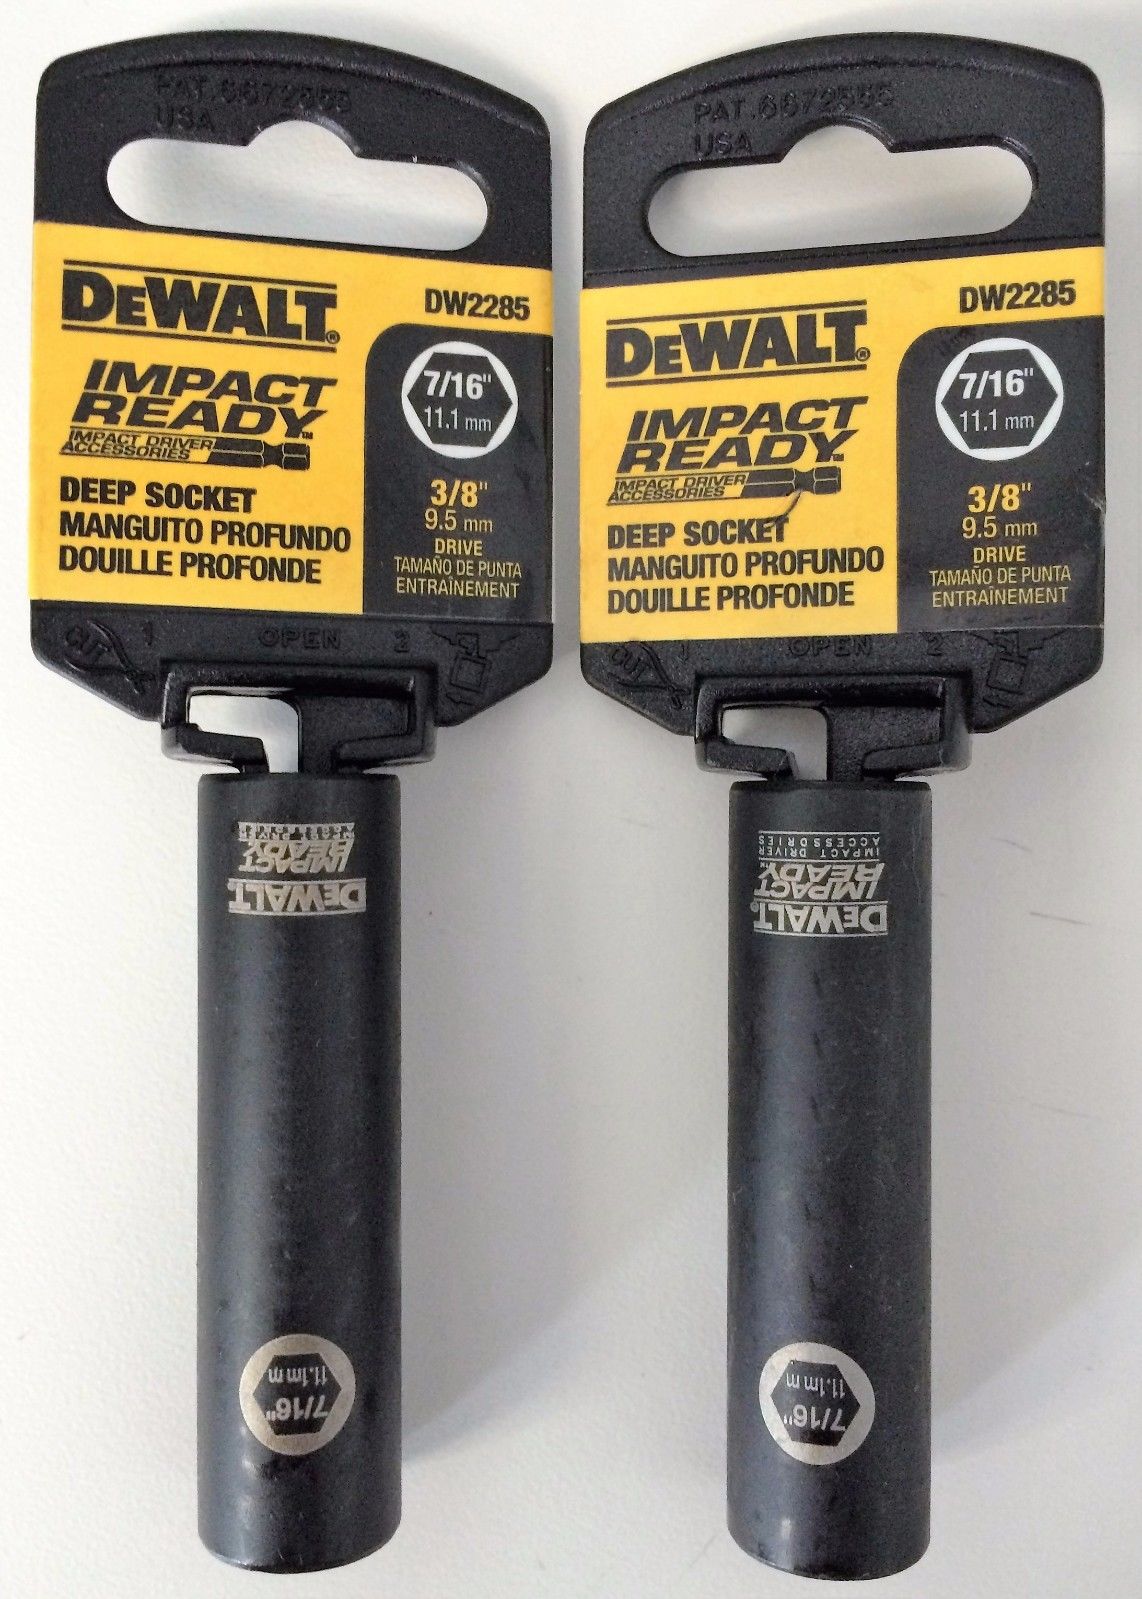 Dewalt DW2285 Impact Ready Deep Socket 7/16" 3/8 Drive (2PCS)